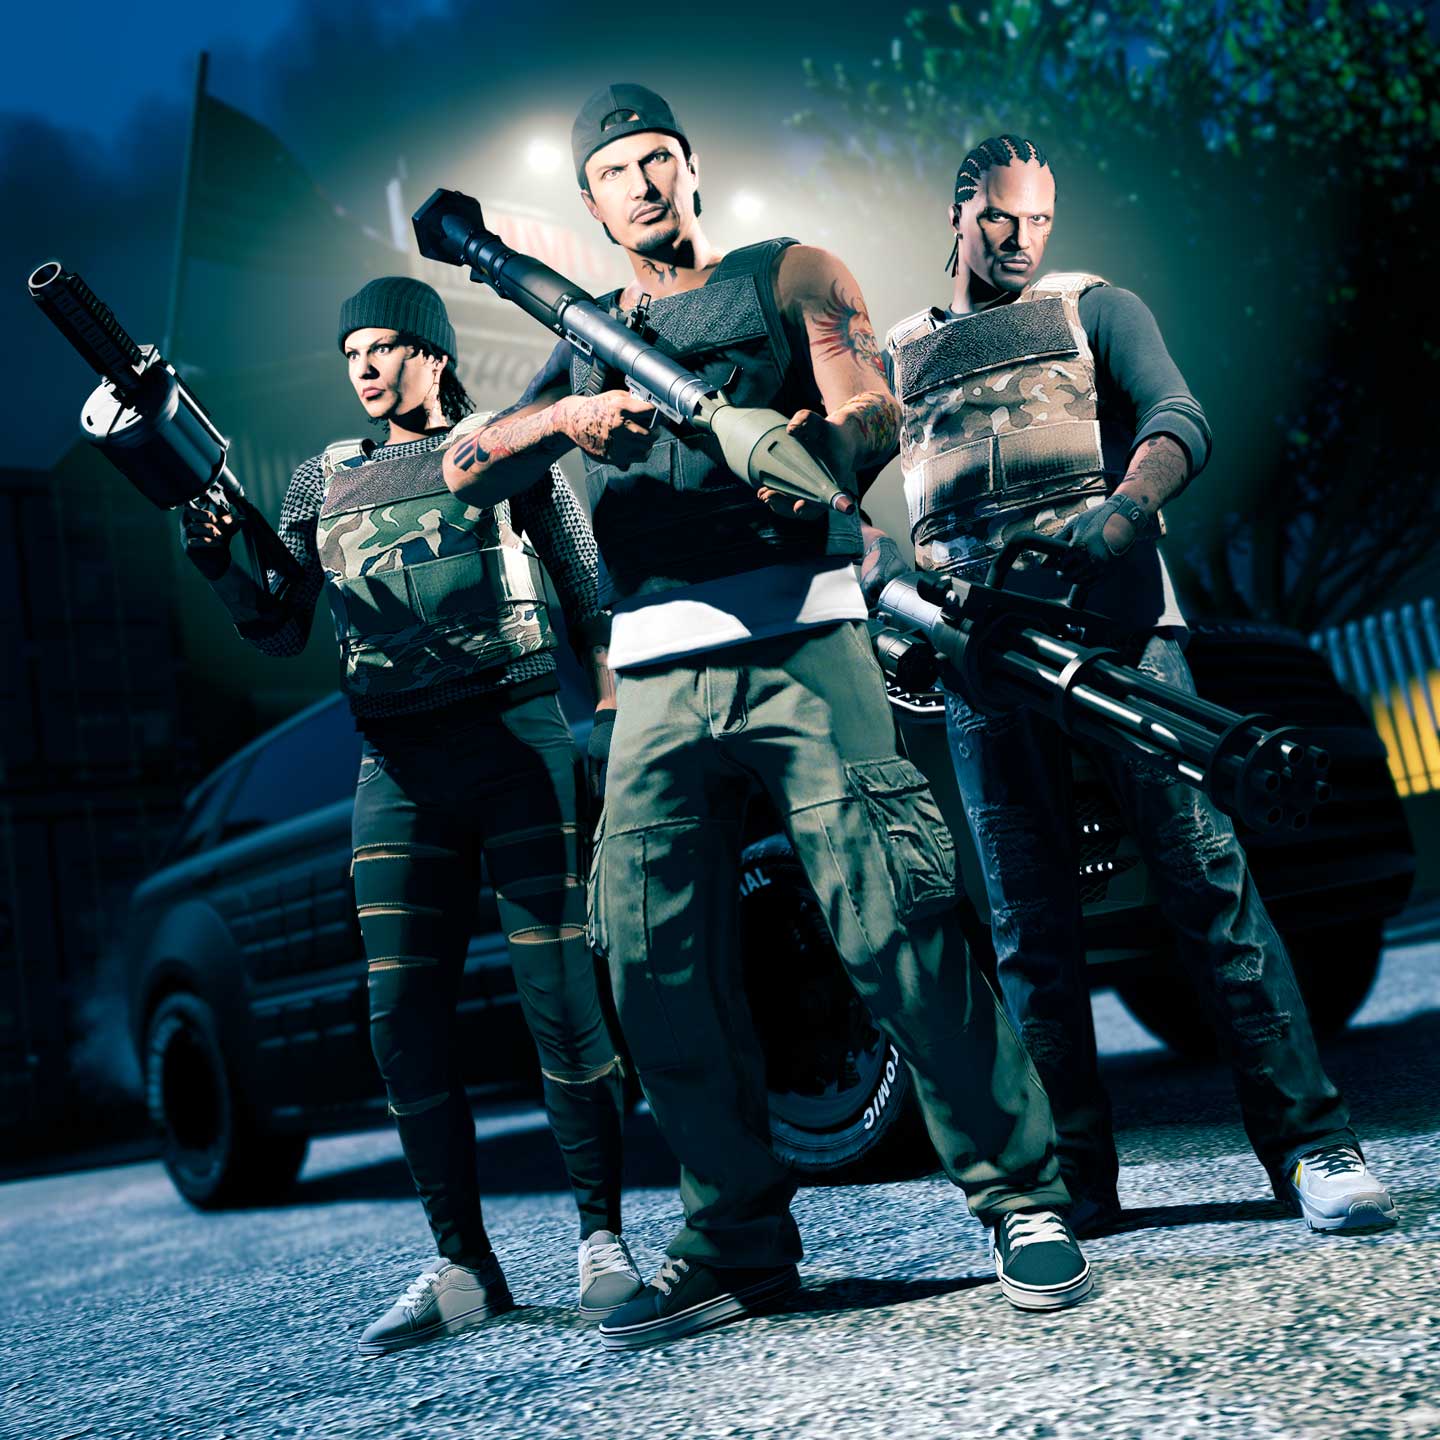 GTA Online: San Andreas Mercenaries Now Available - Rockstar Games